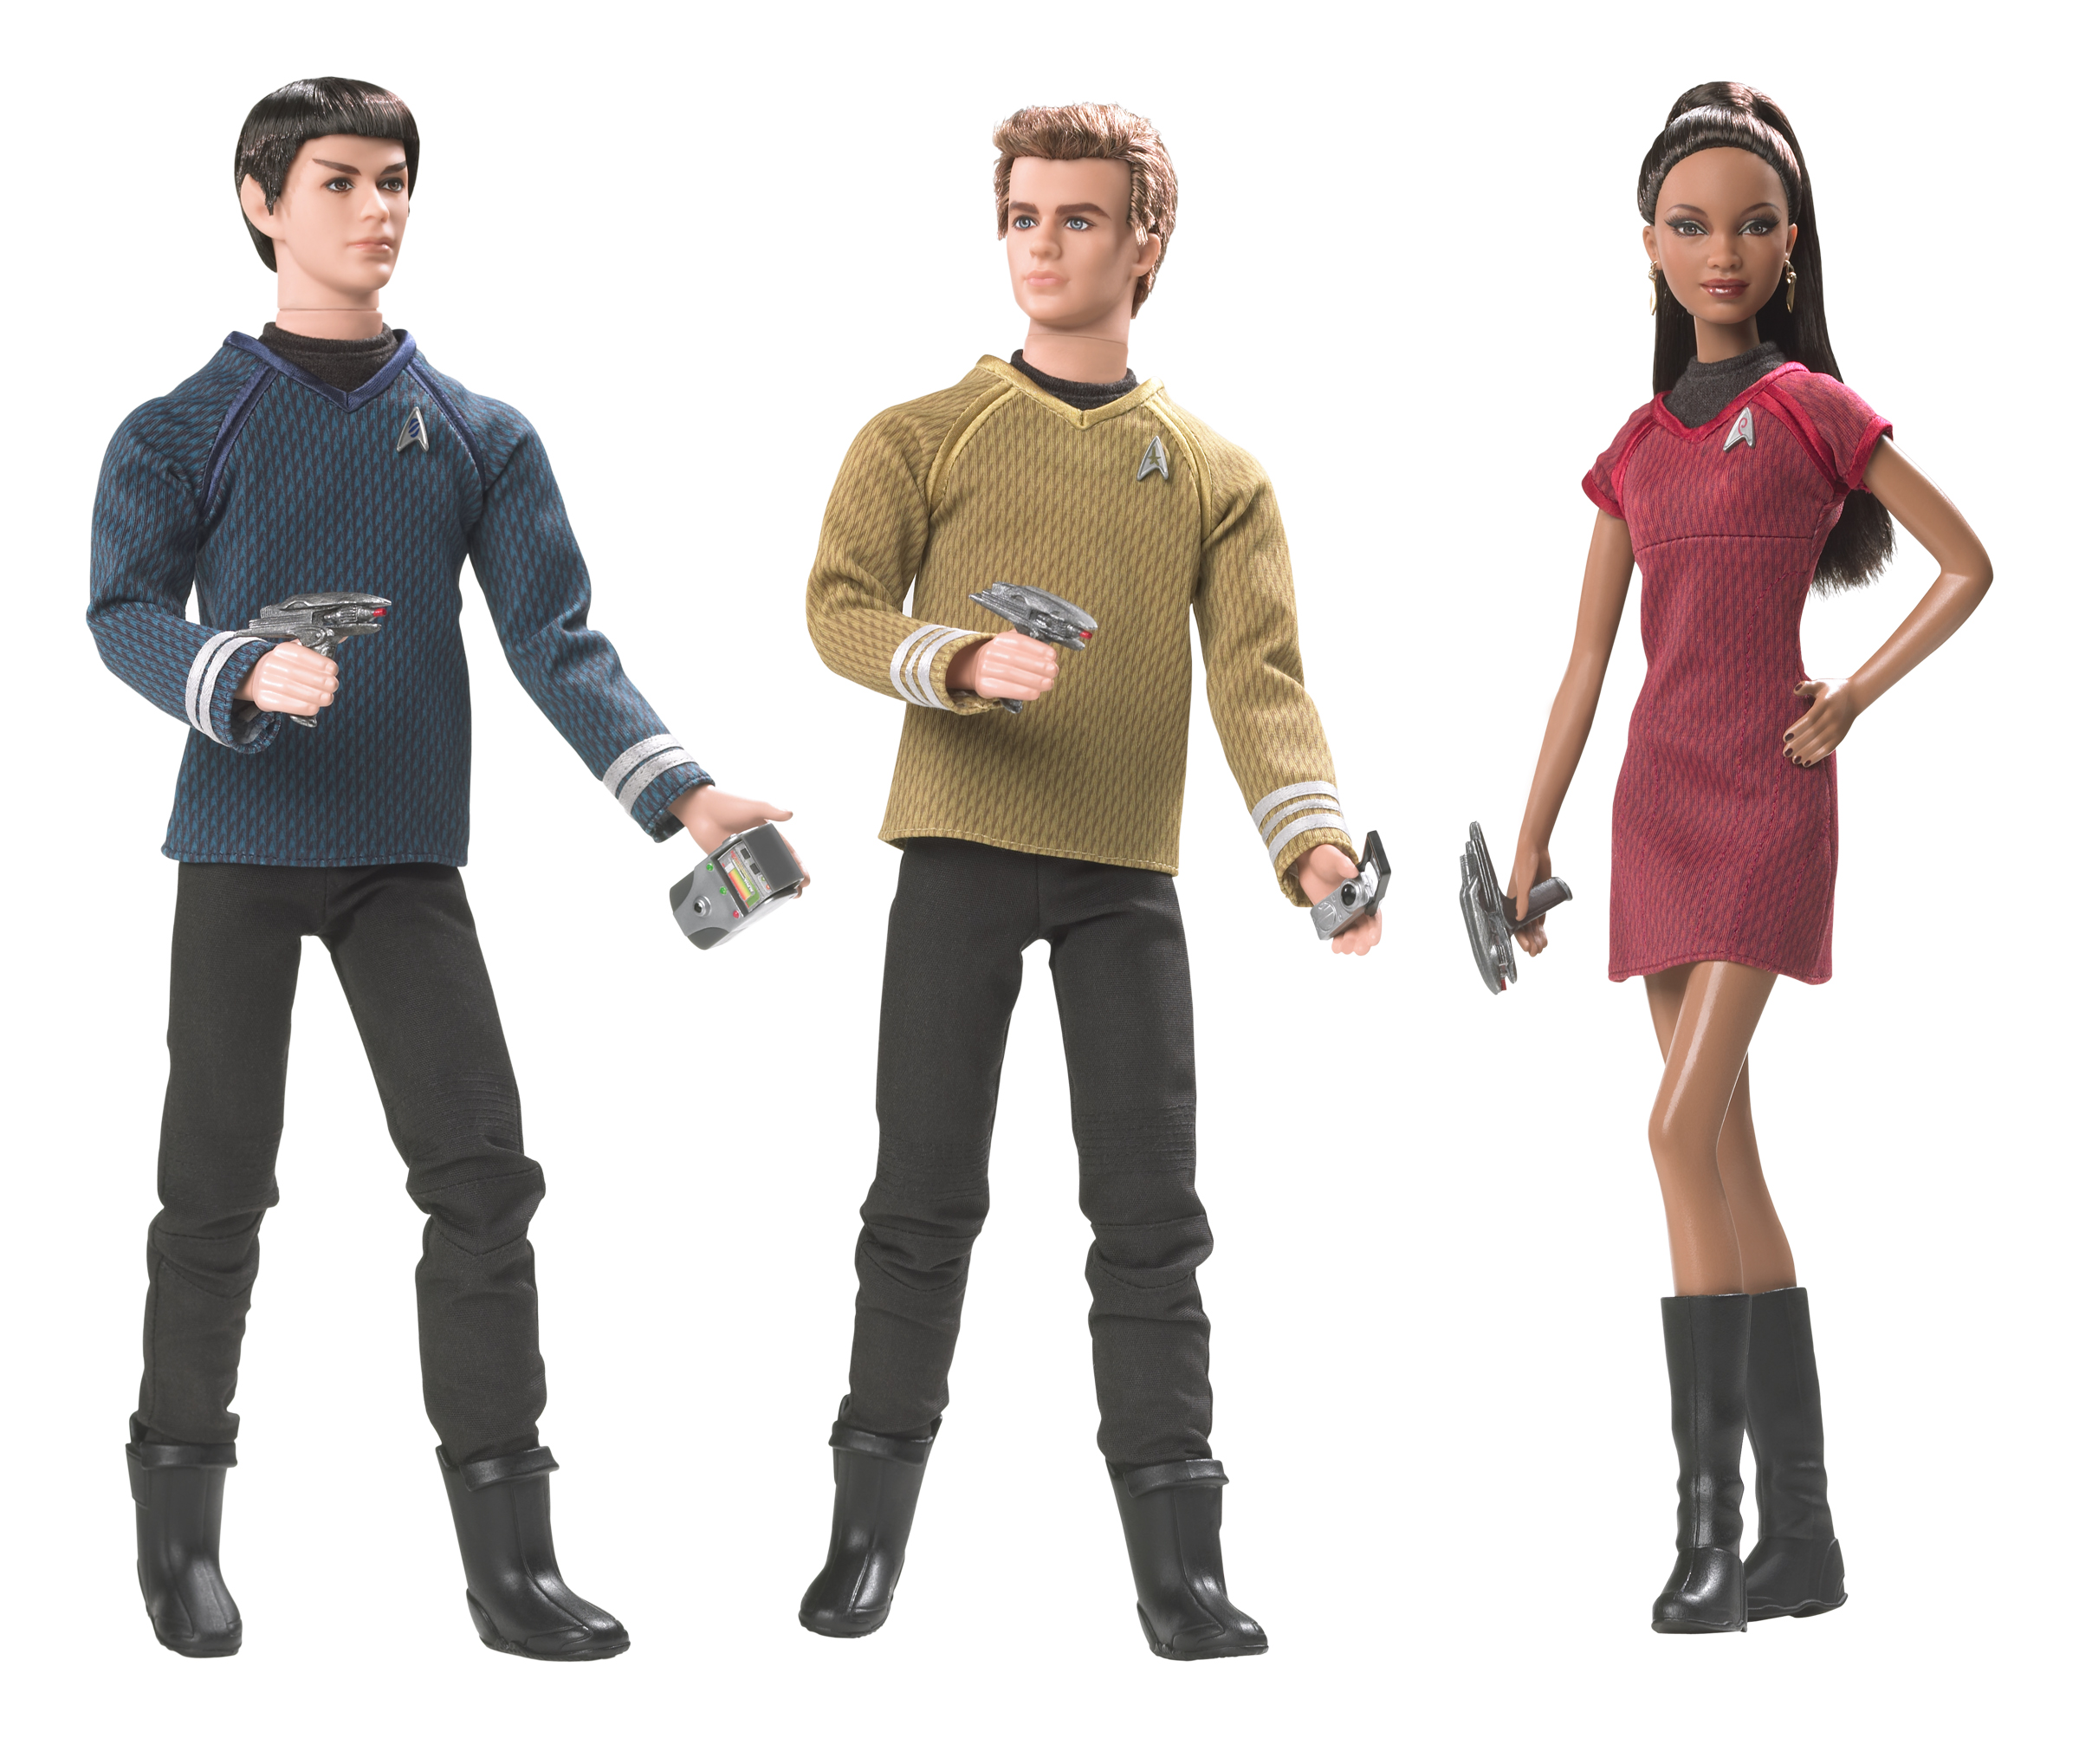 Detailed Look At Star Trek Movie Barbie Figures Including Detail On Prop Accessories